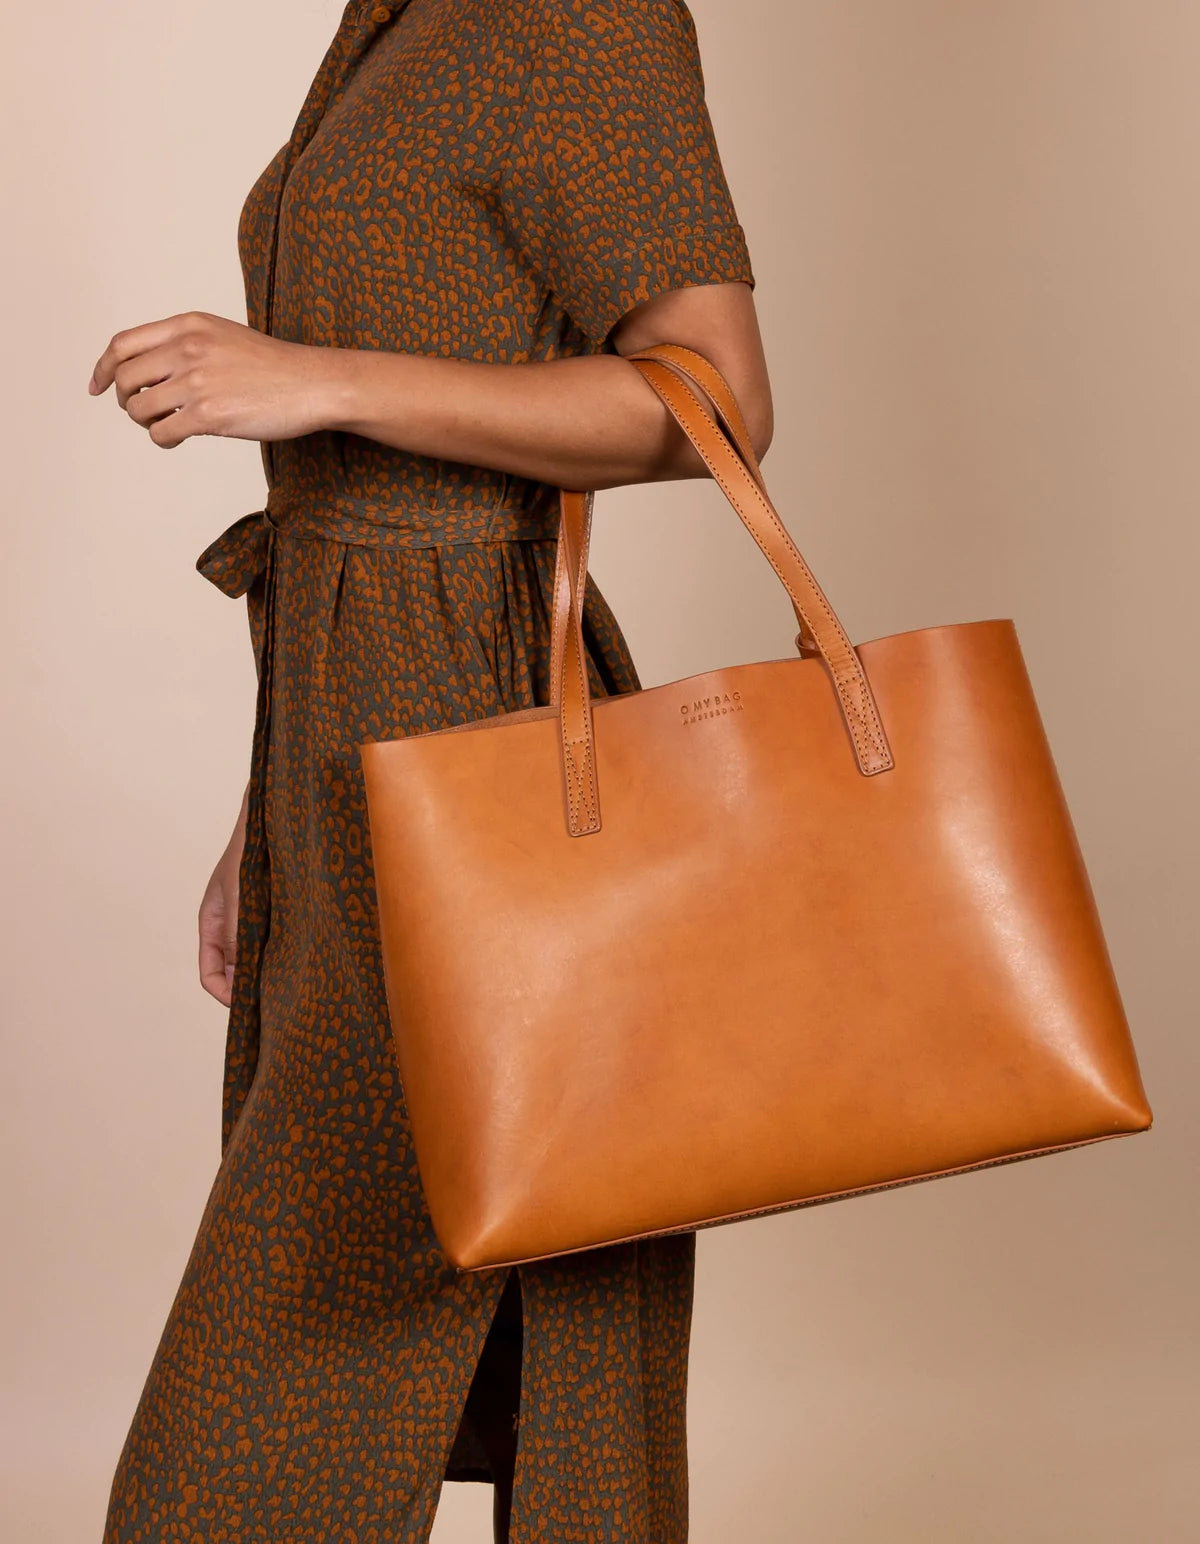 SAM Shopper | Cognac classic leather